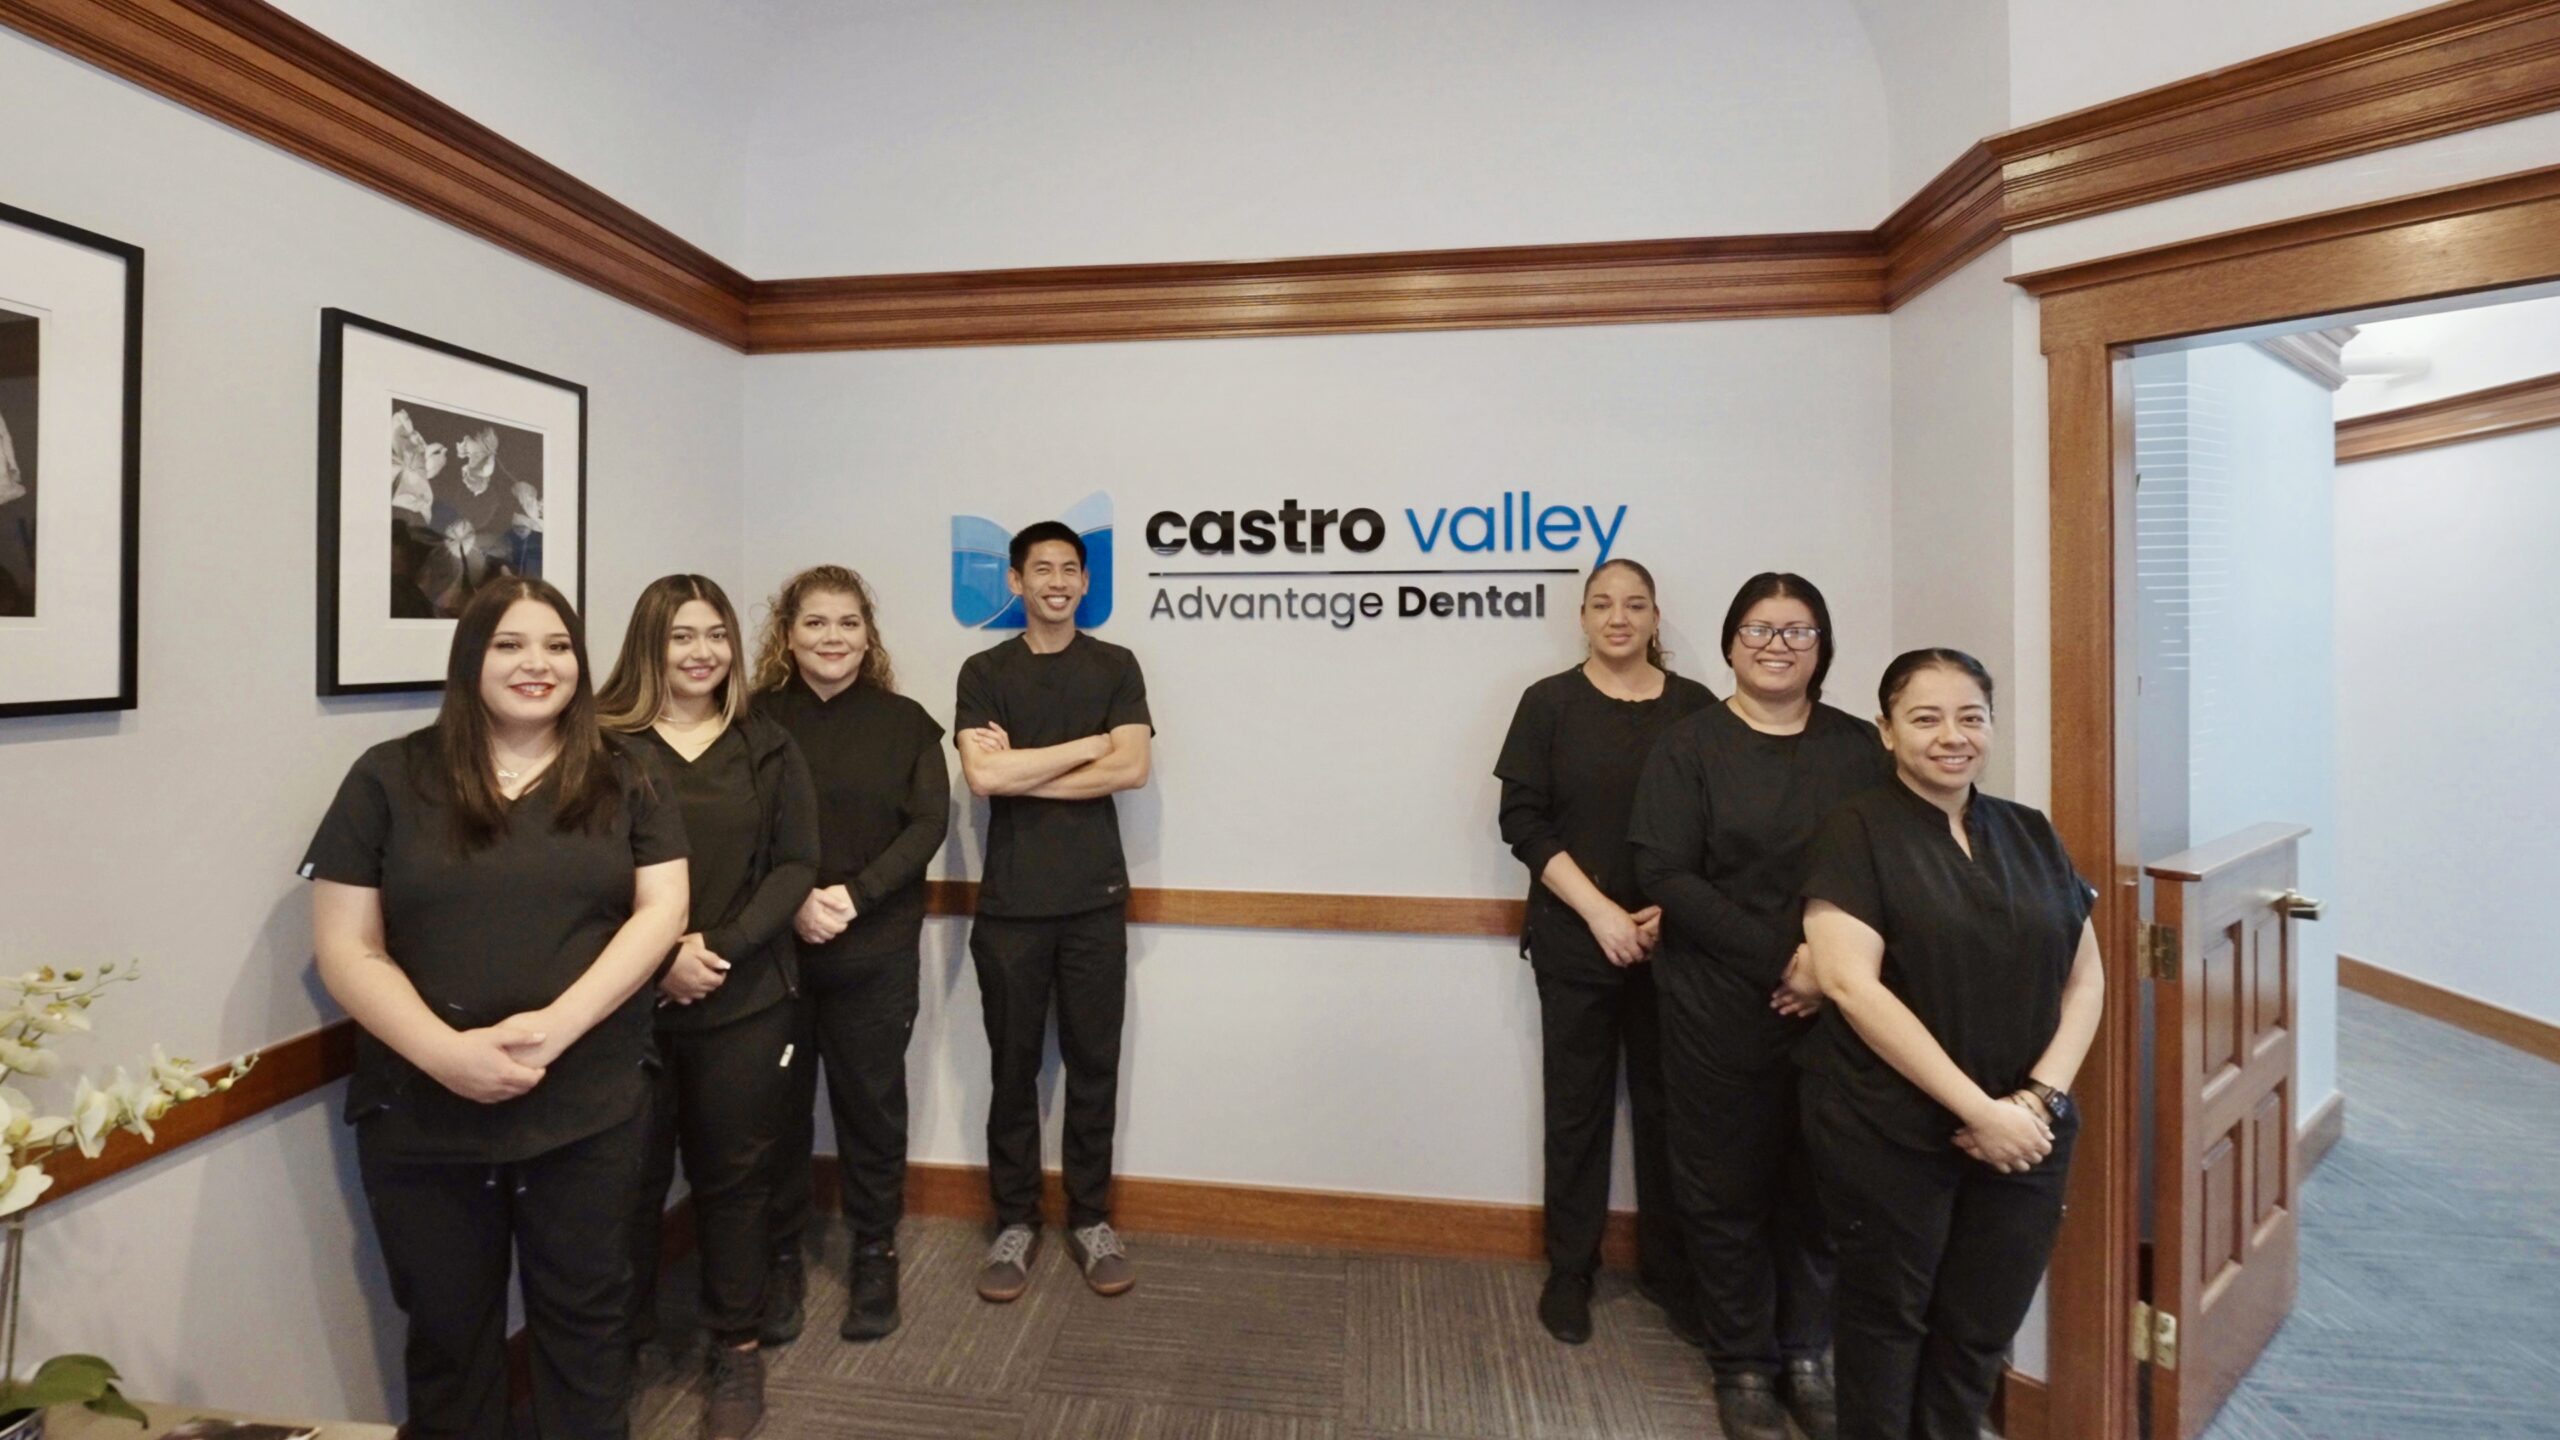 castro valley advantage dental - dentist office in castro valley